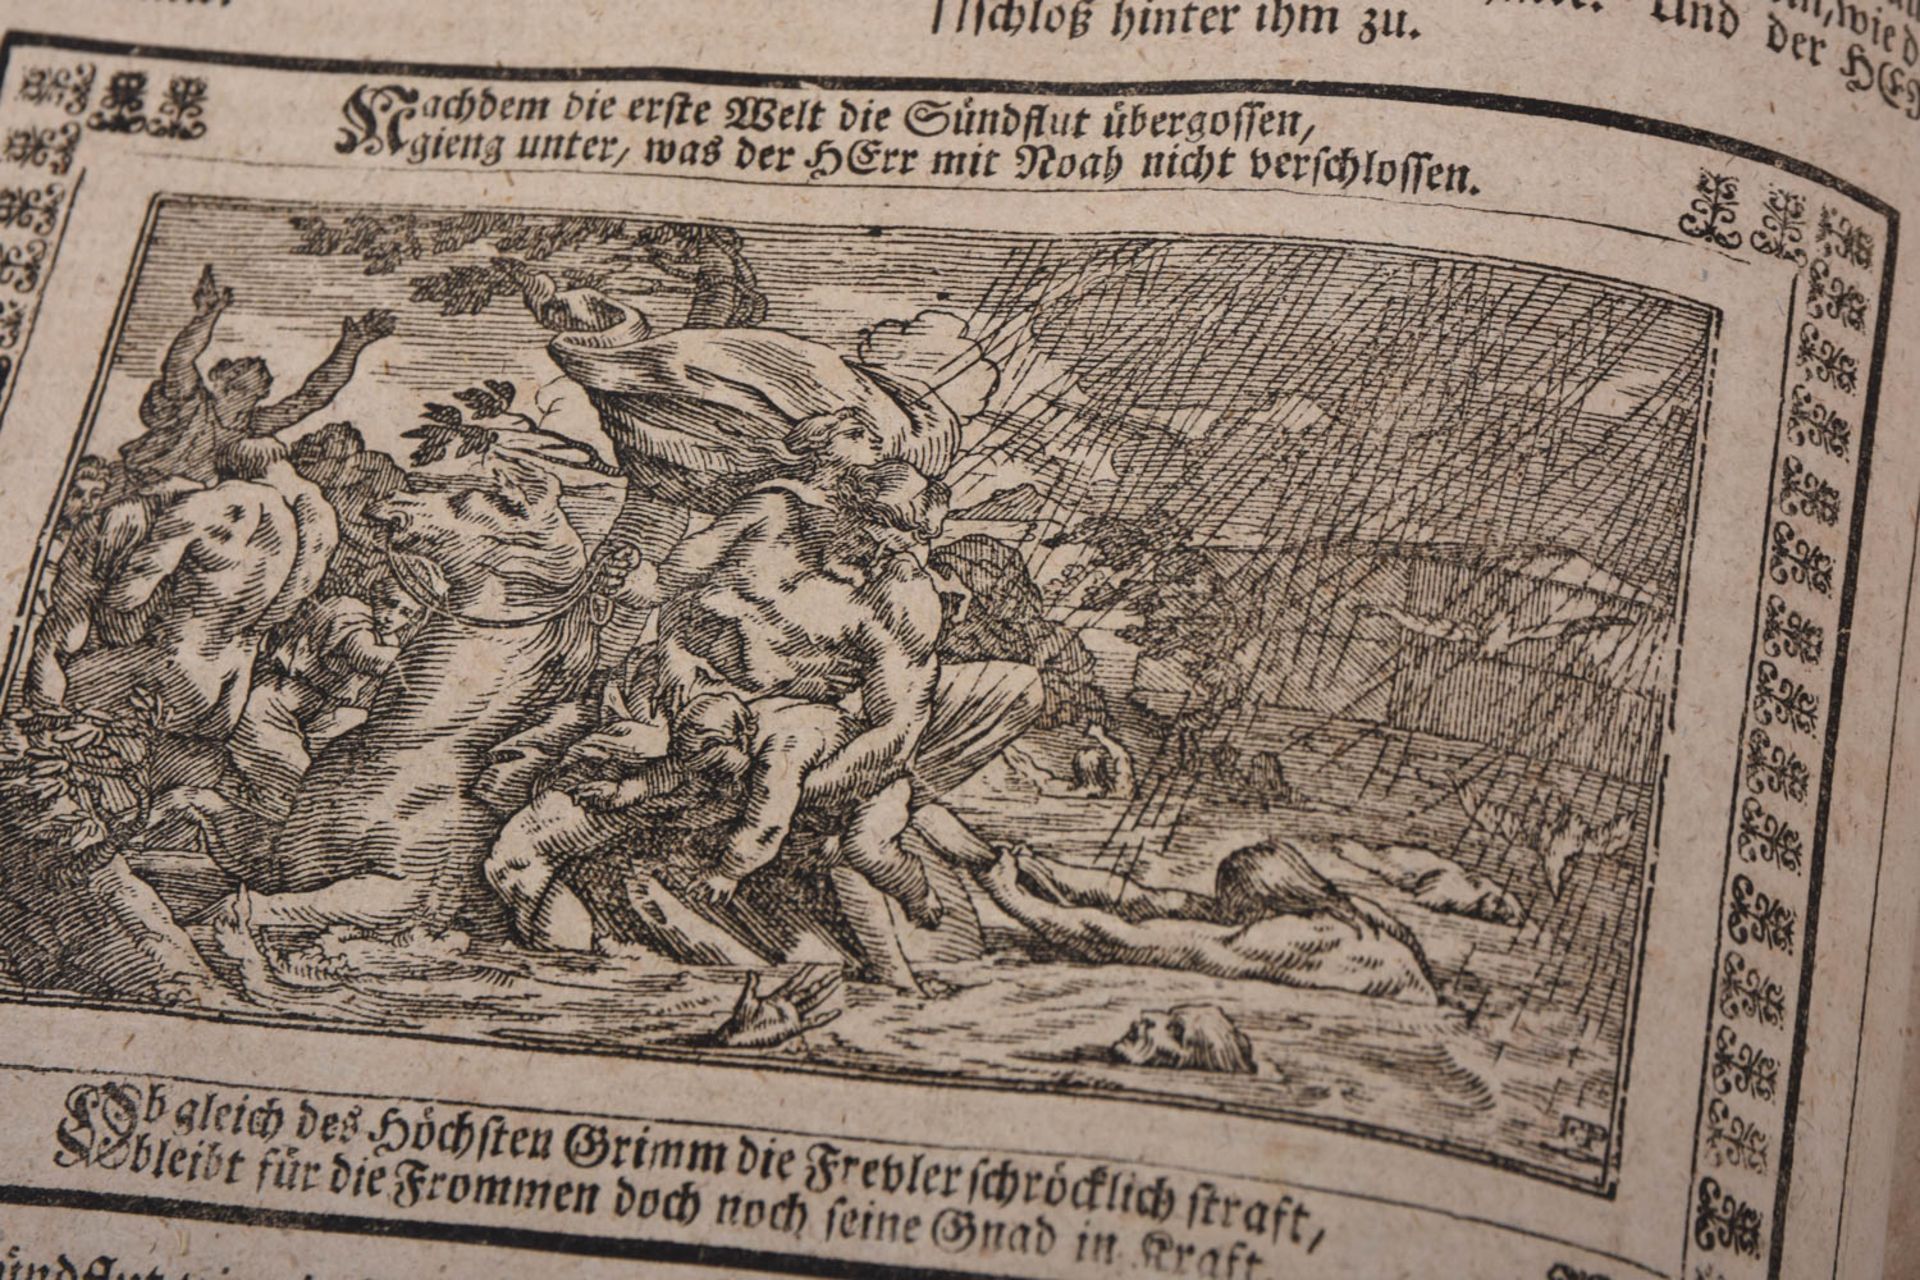 Luther Bibel, 1641 - Image 8 of 15